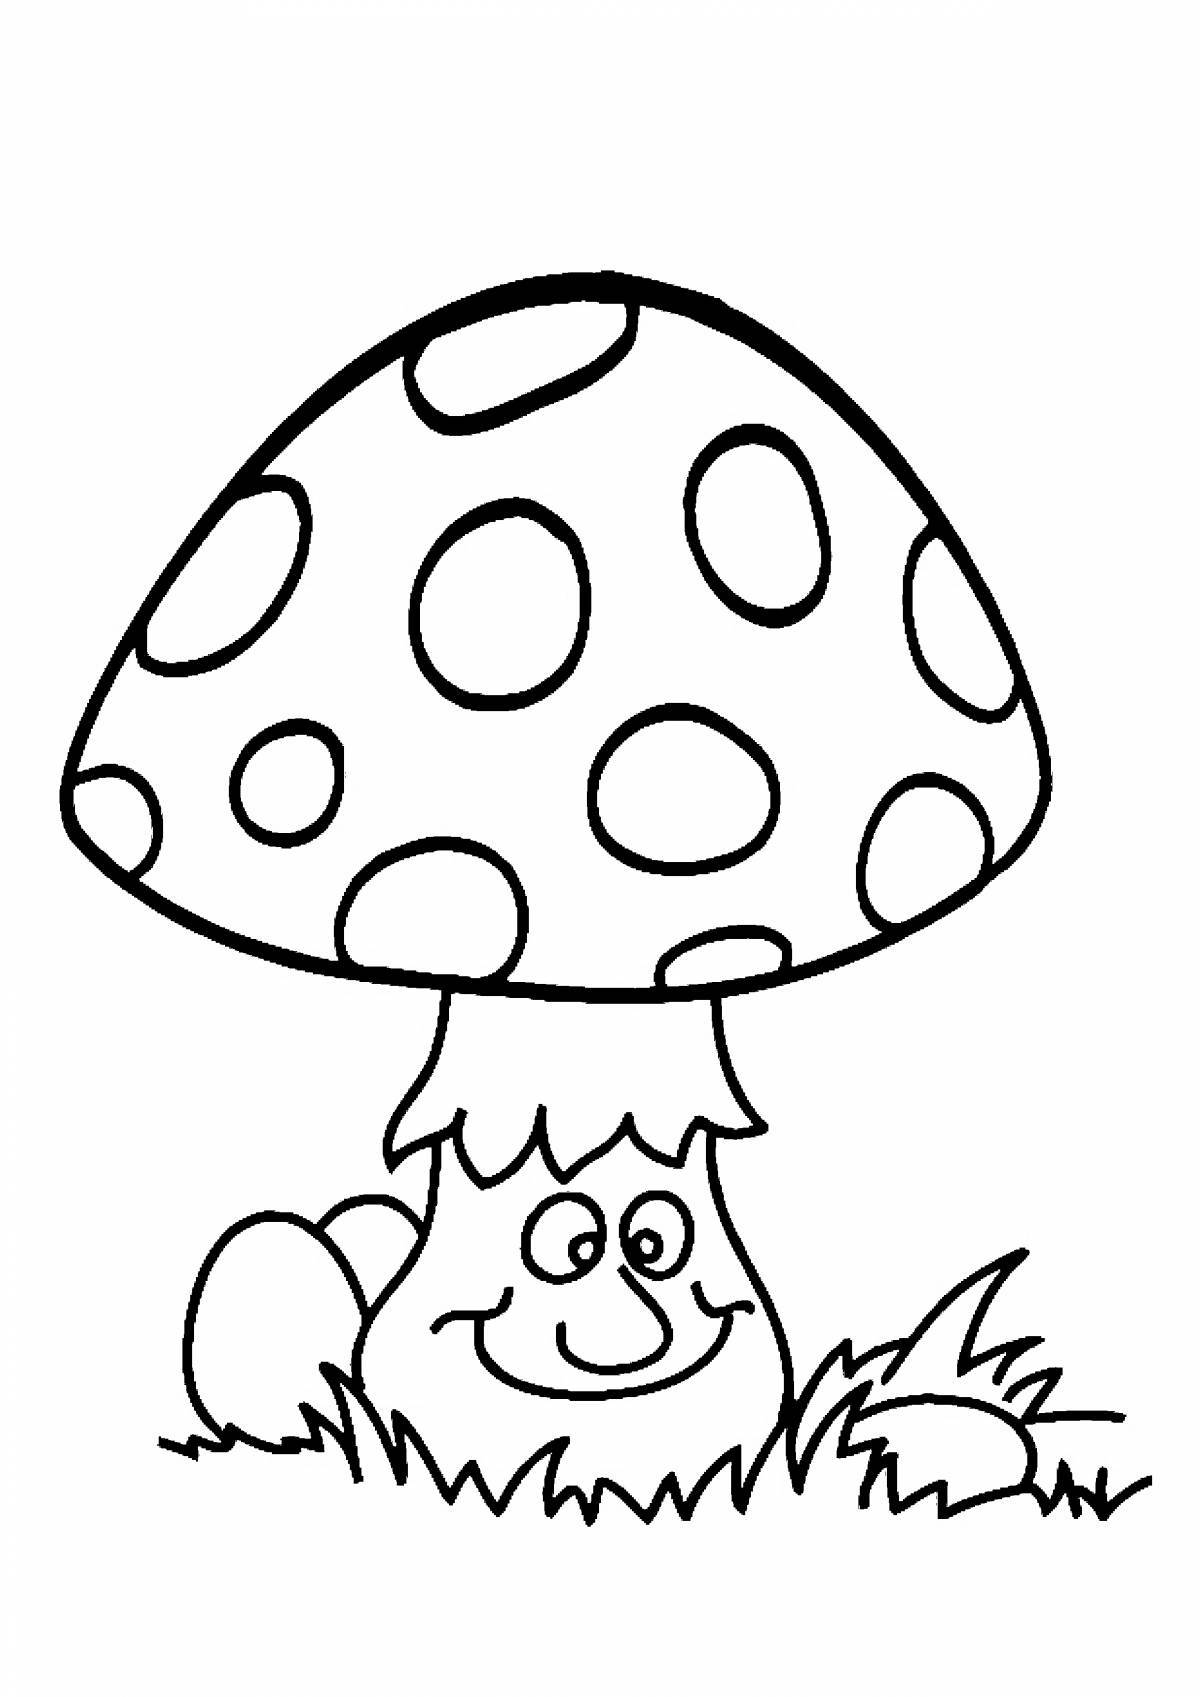 Living mushroom coloring page